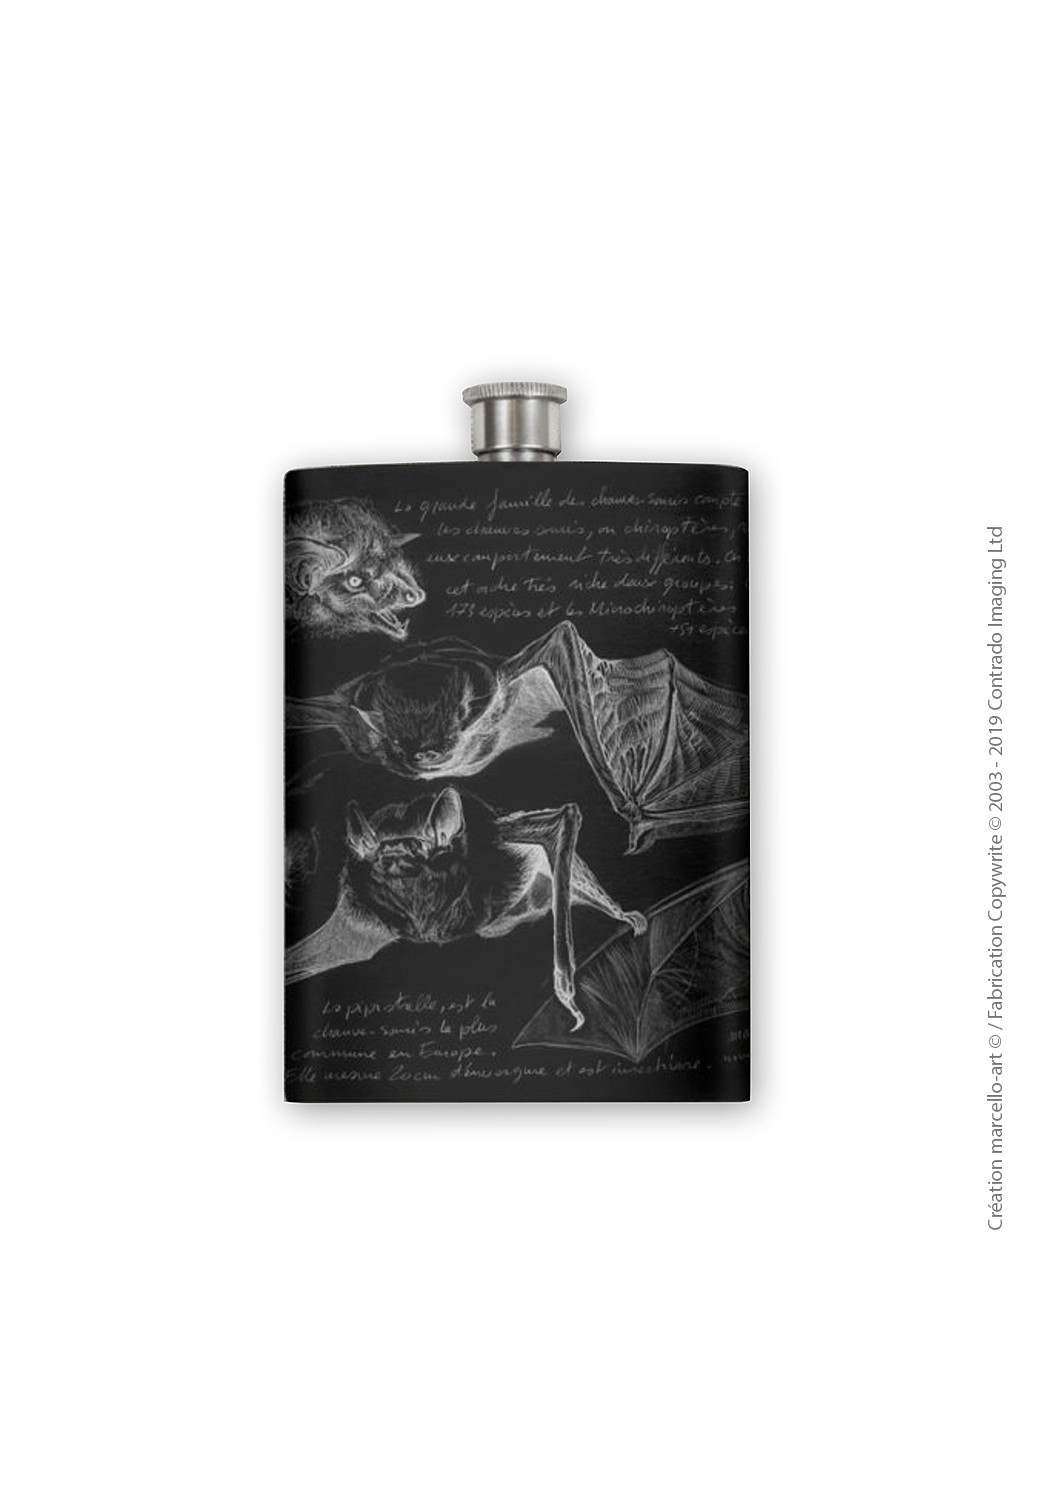 Marcello-art: Decoration accessoiries Flask 31 pipistrelle black